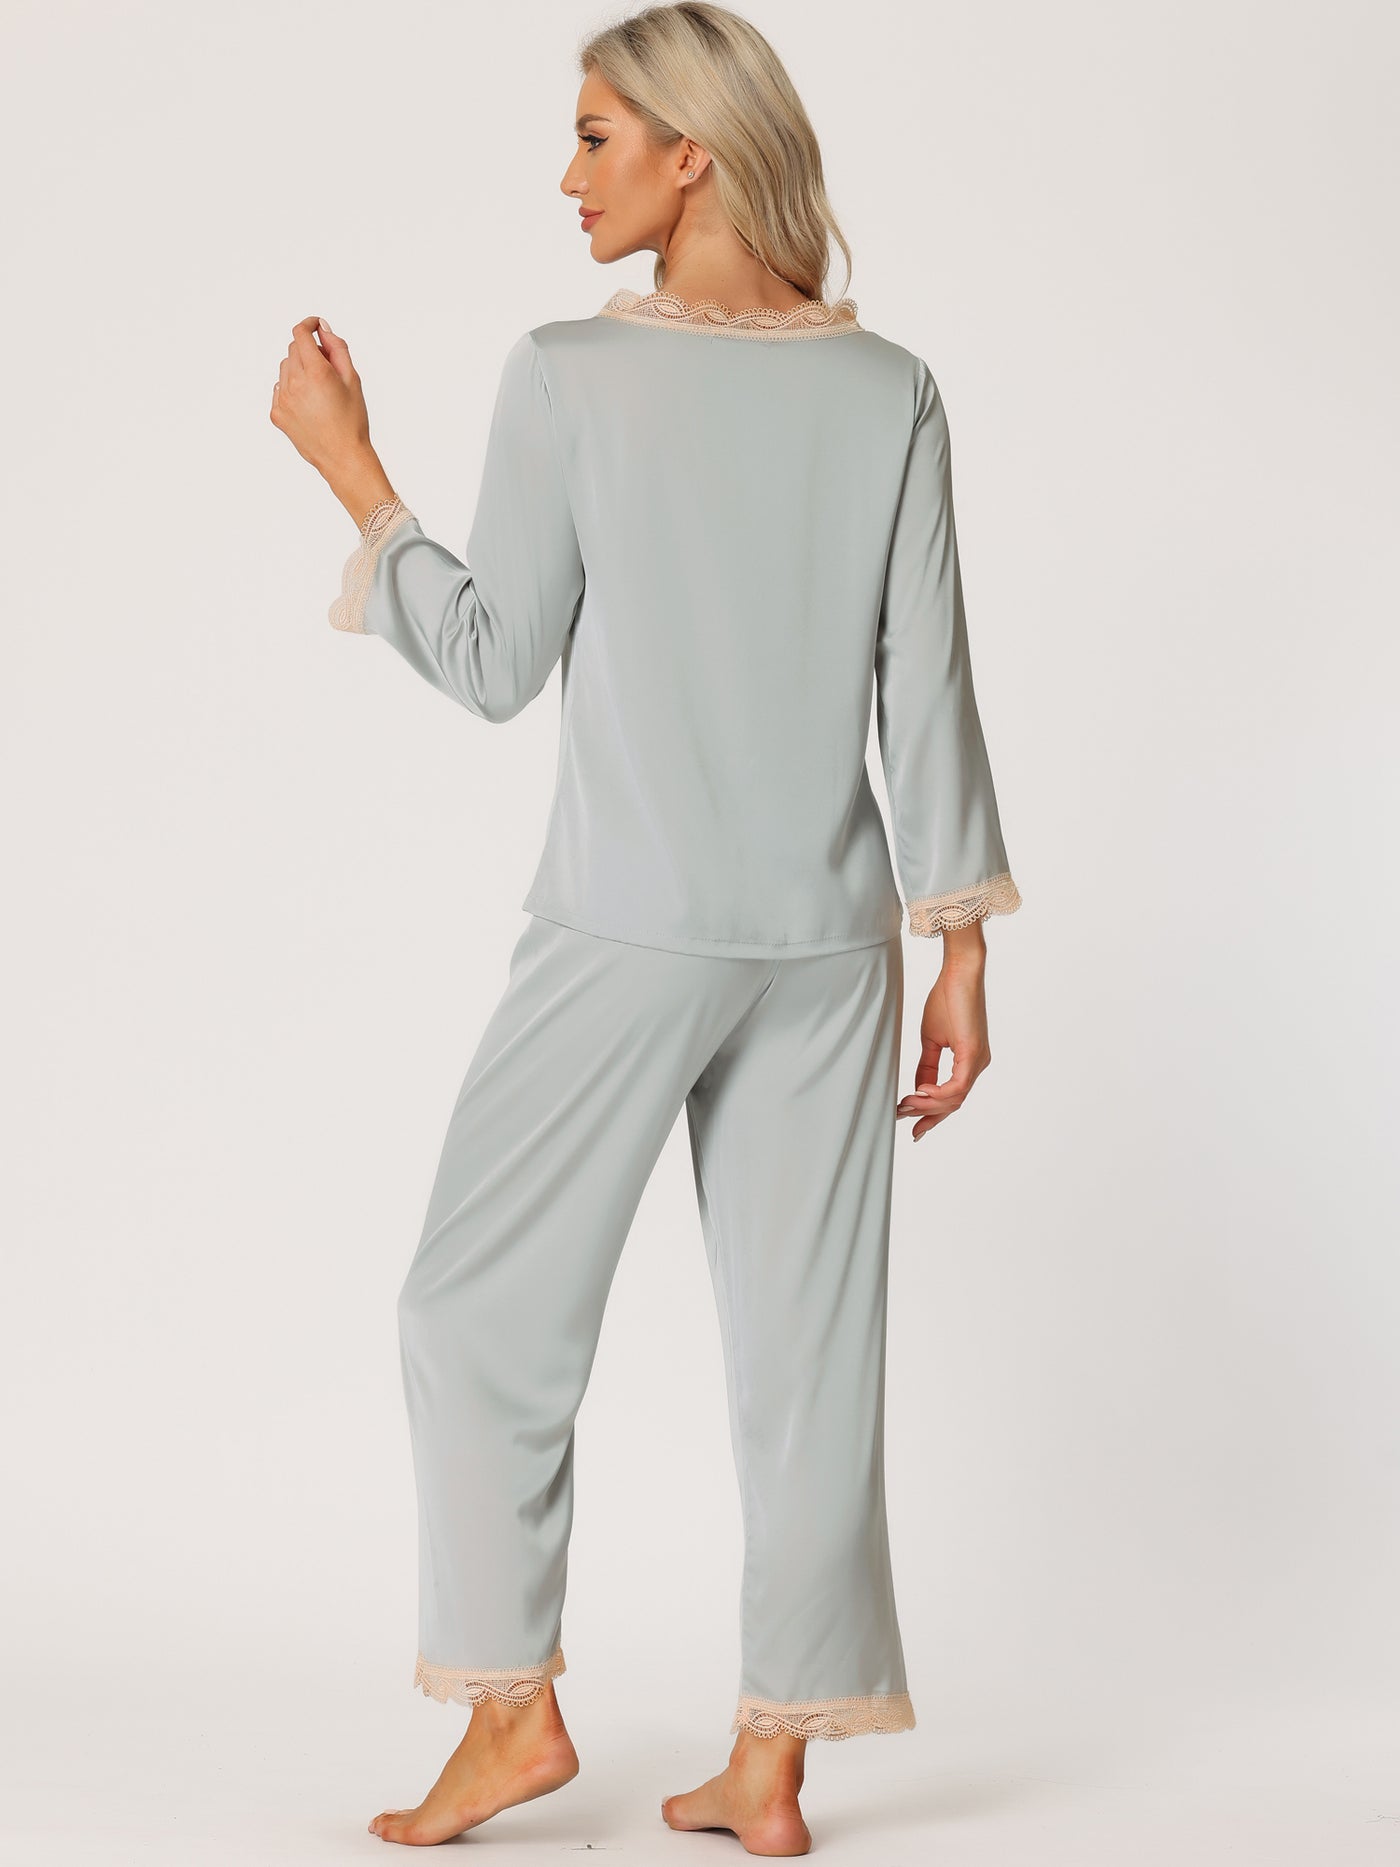 Bublédon Women's Satin Lounge Sleepwear Night Suits V Neck Lace Trim Pajama Sets